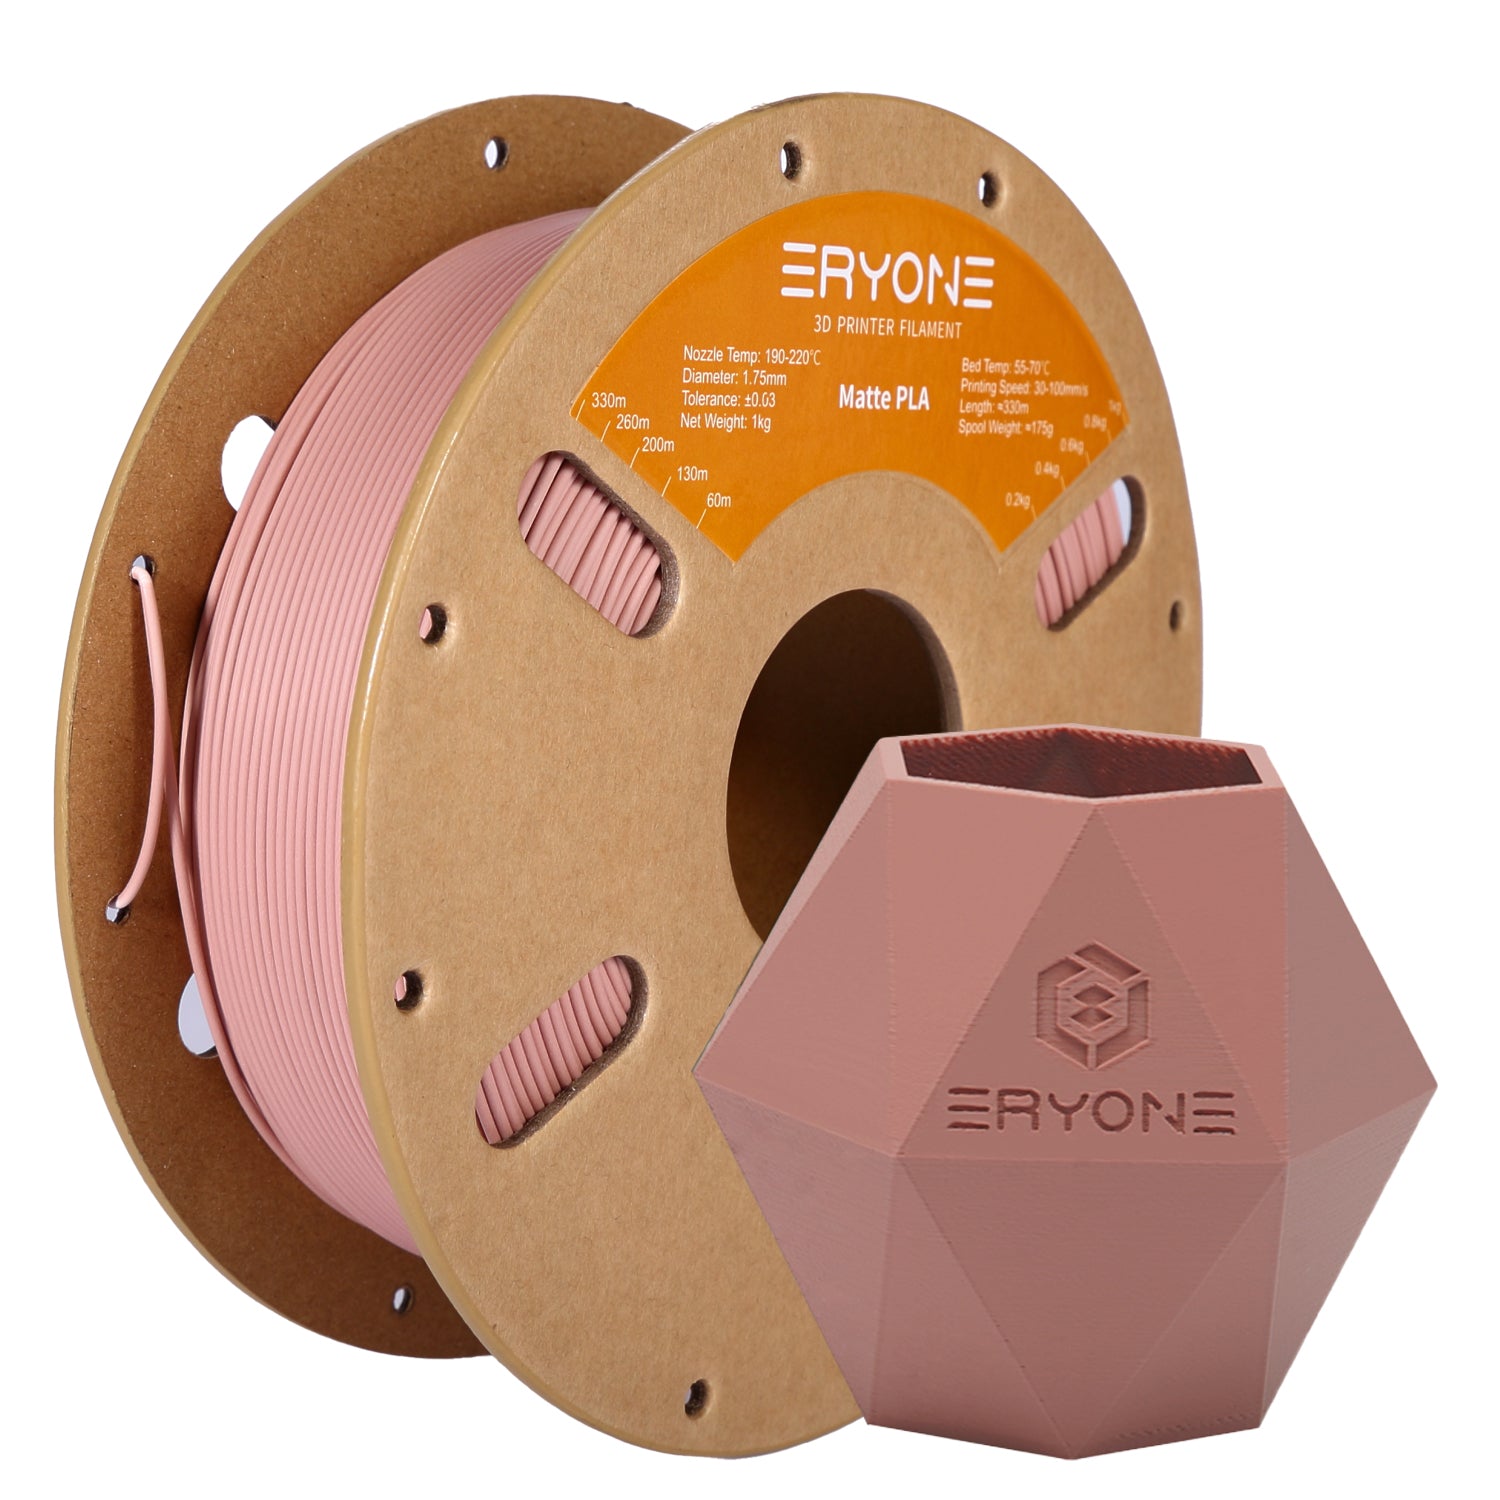 ERYONE Standard Matte /Matte Hyper Speed PLA Filament, 1.75mm Filament for 3D Printer, 1KG(2.2LBS)/ Spool